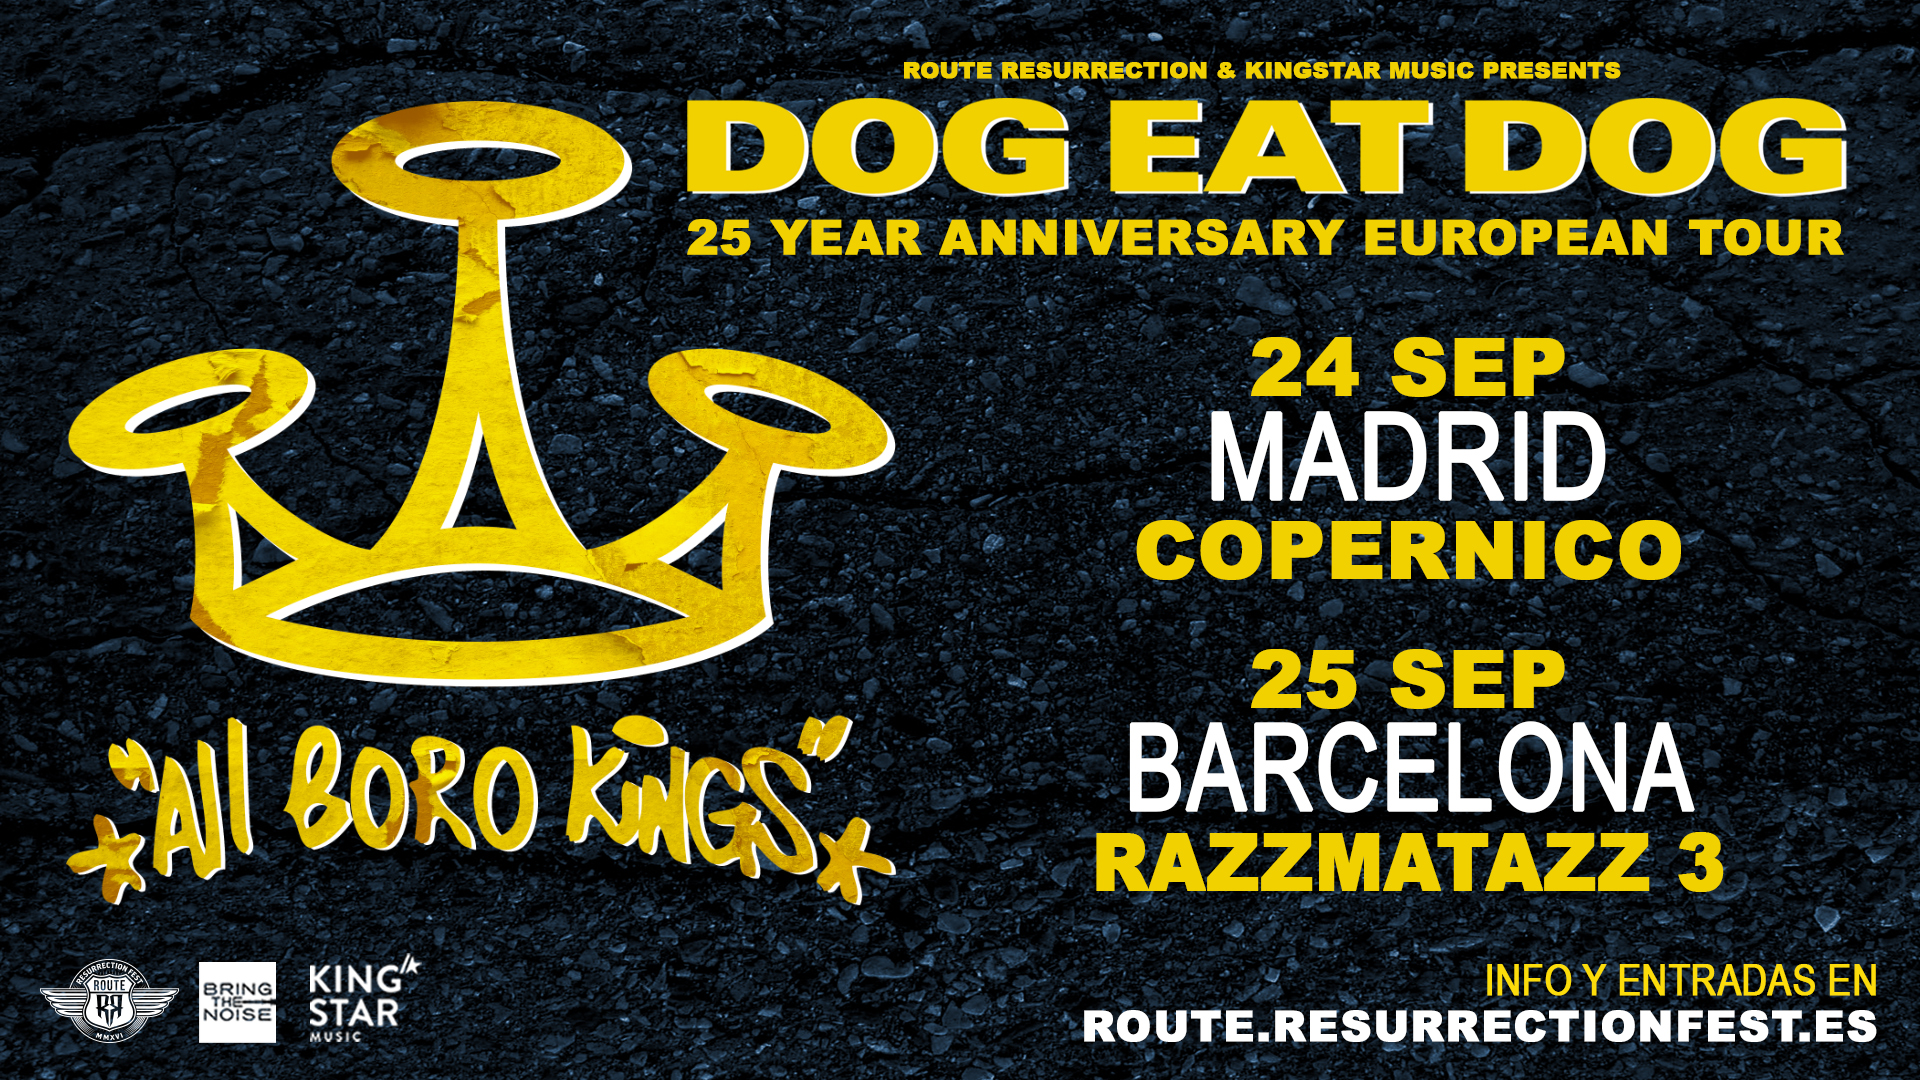 Route Resurrection Fest 2019 - Dog Eat Dog - Event